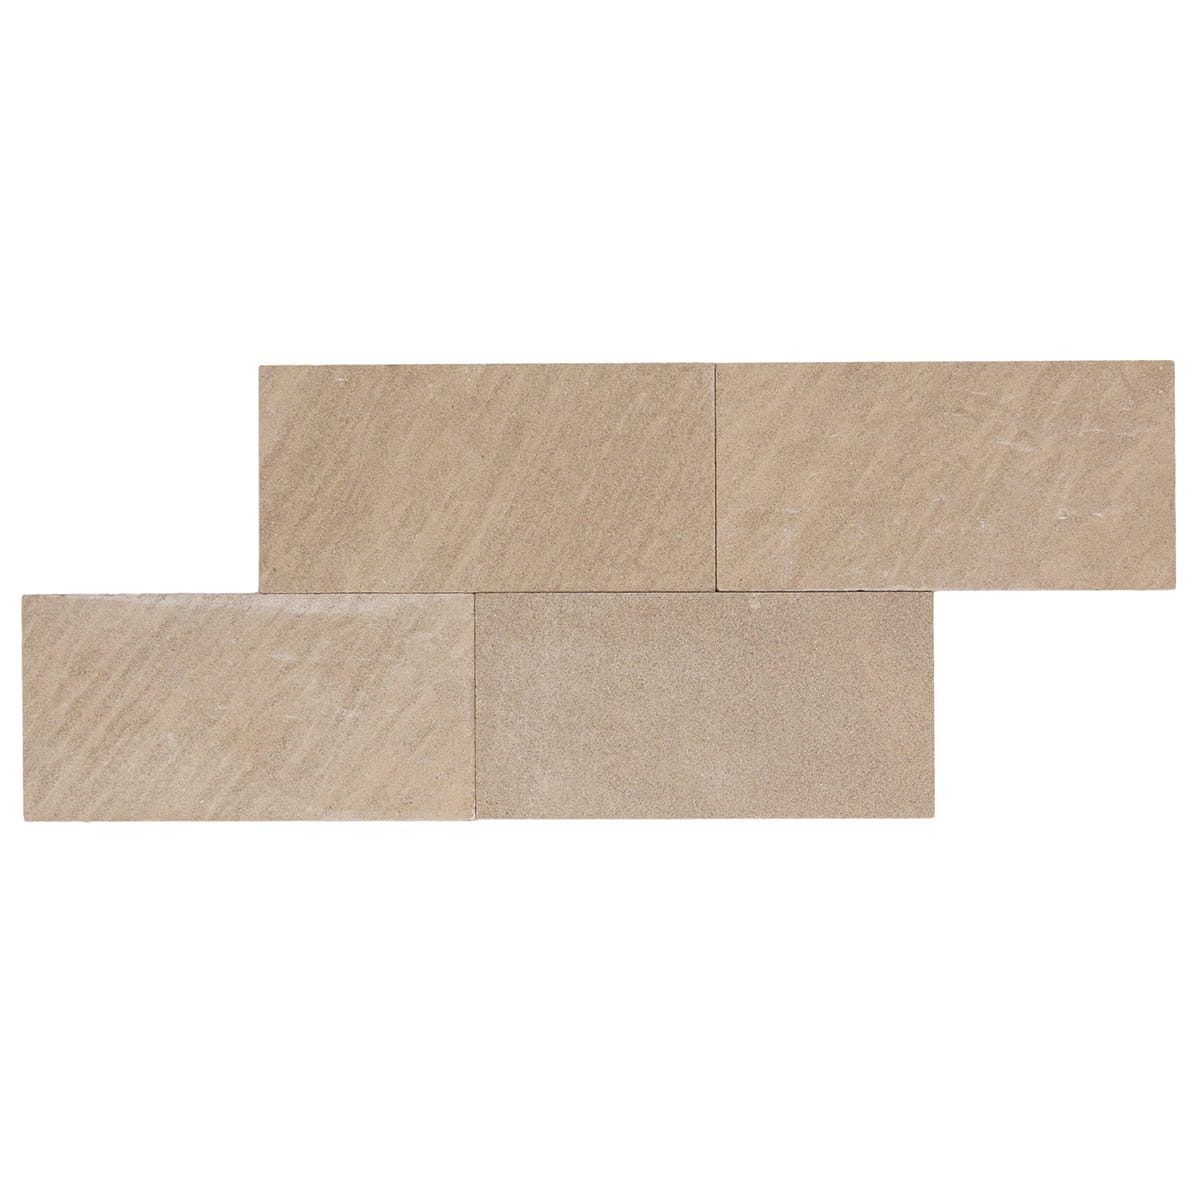 Albi Collection Honed Limestone Field Tiles 3"x6"x3/8" Straight Edge